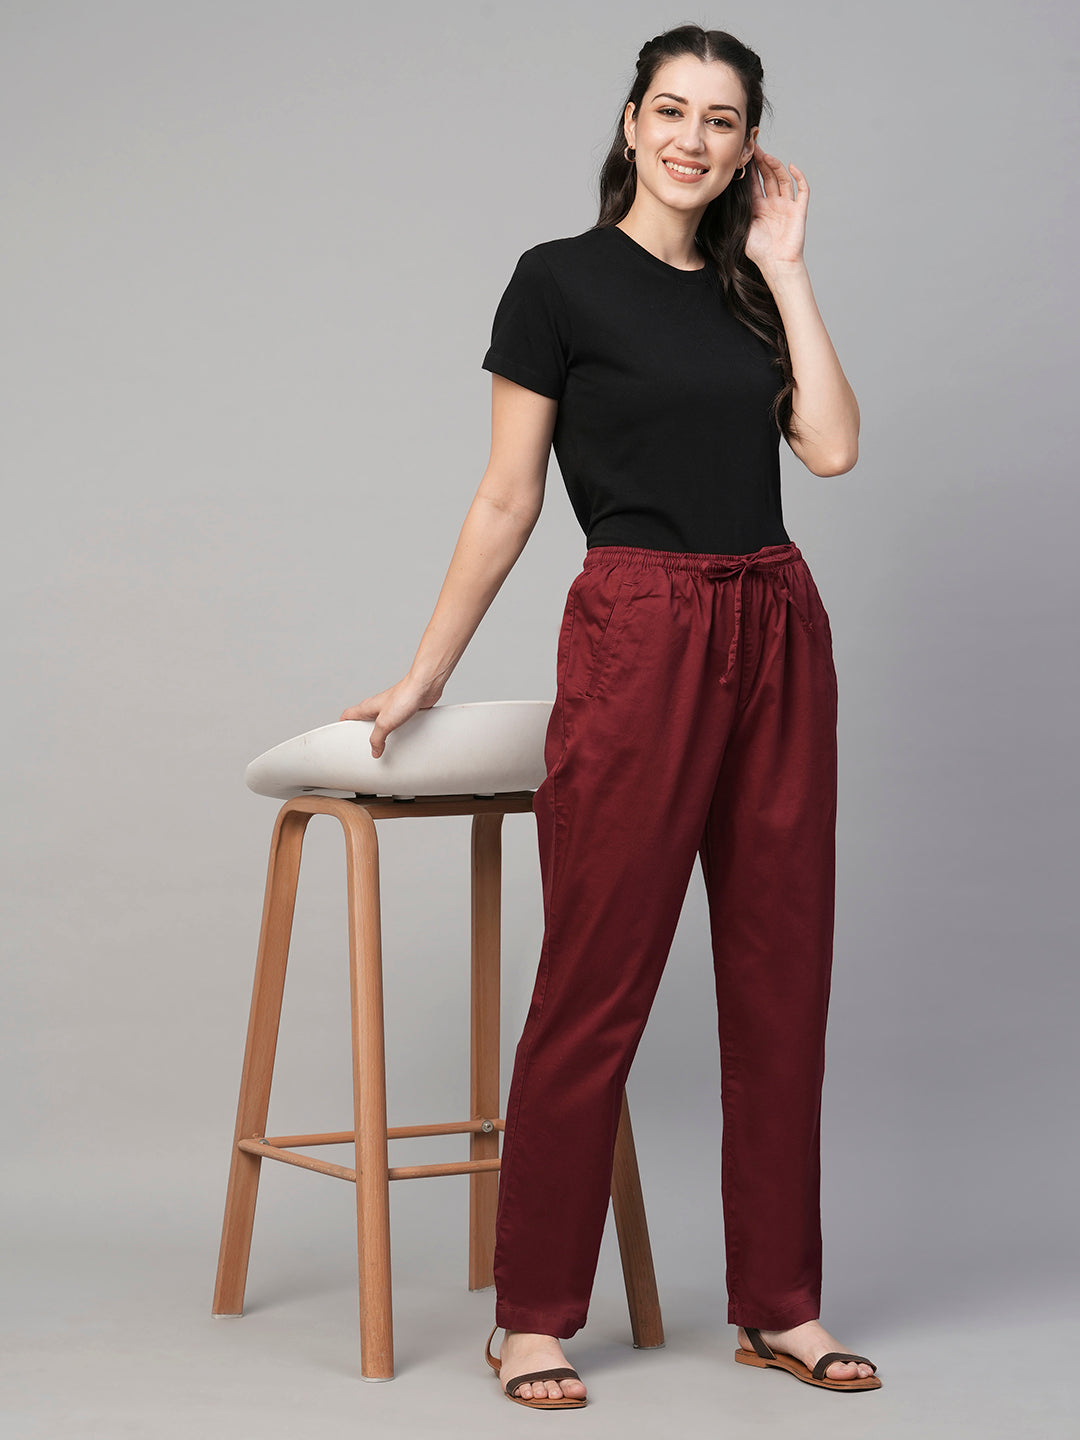 Women's Cotton Elastane Maroon/Red Regular Fit Pant